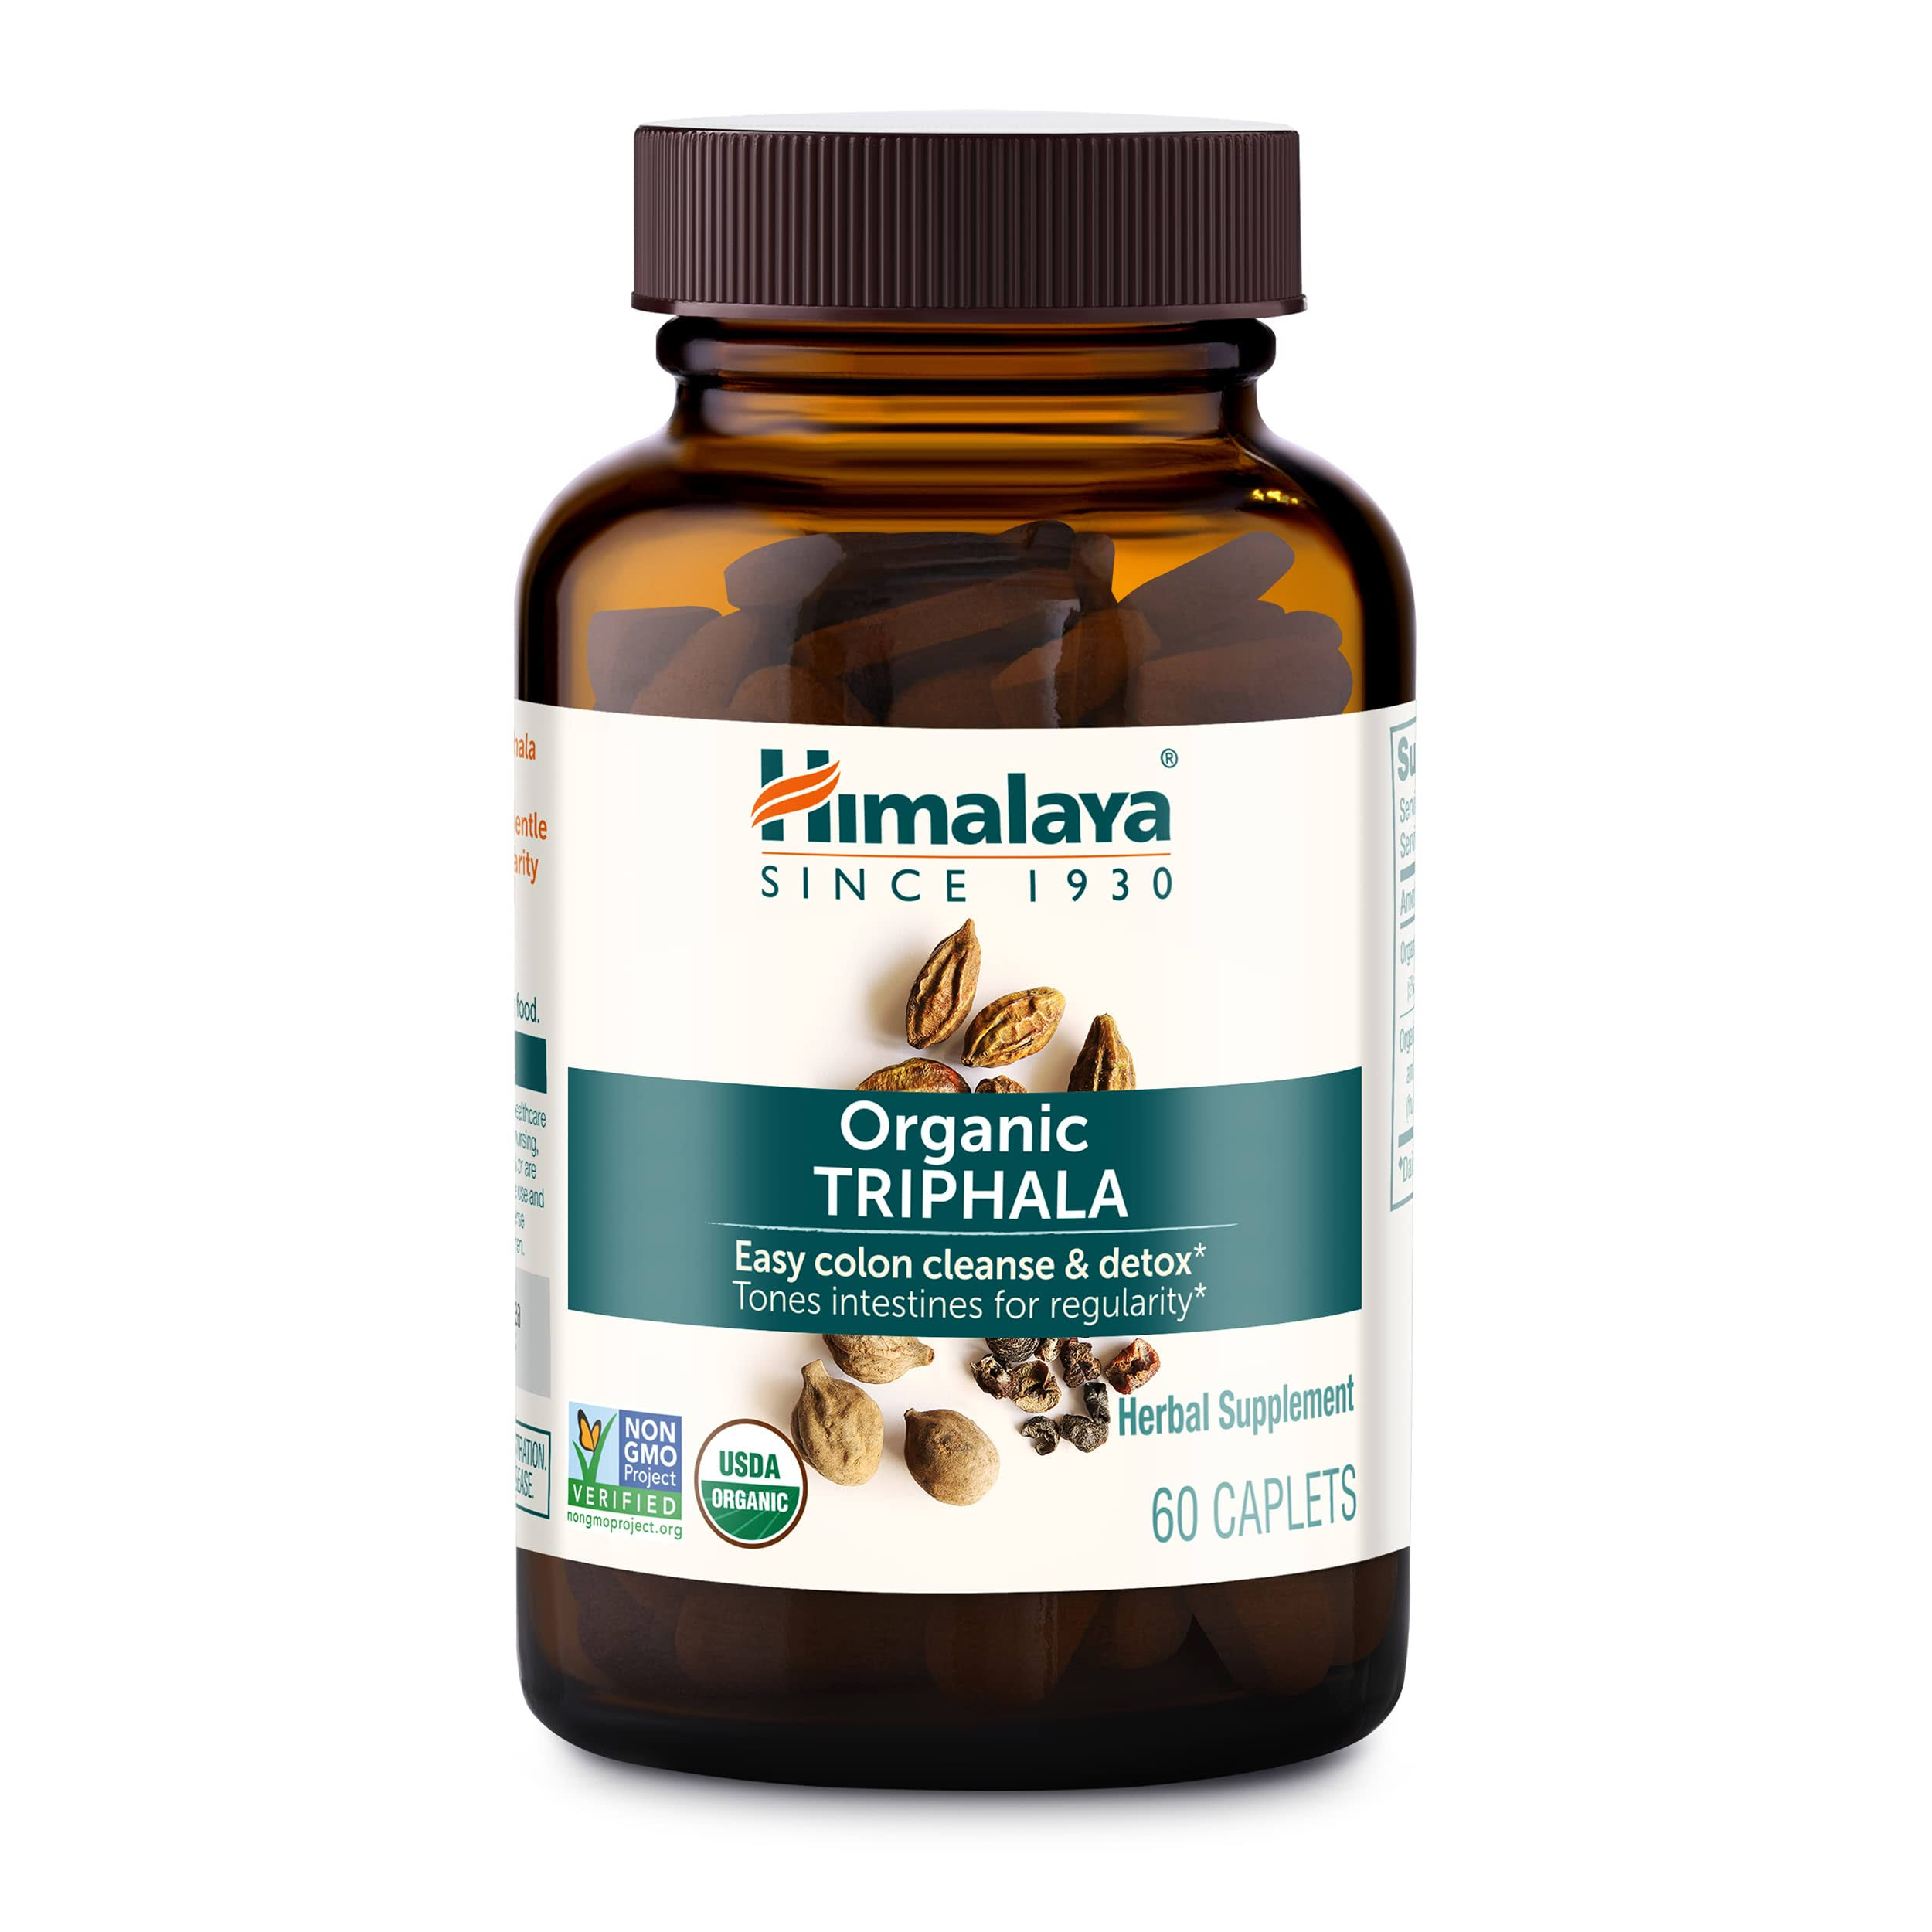 Himalaya Pure Herbs Triphala Digestive Support Supplement - 60 Caplets